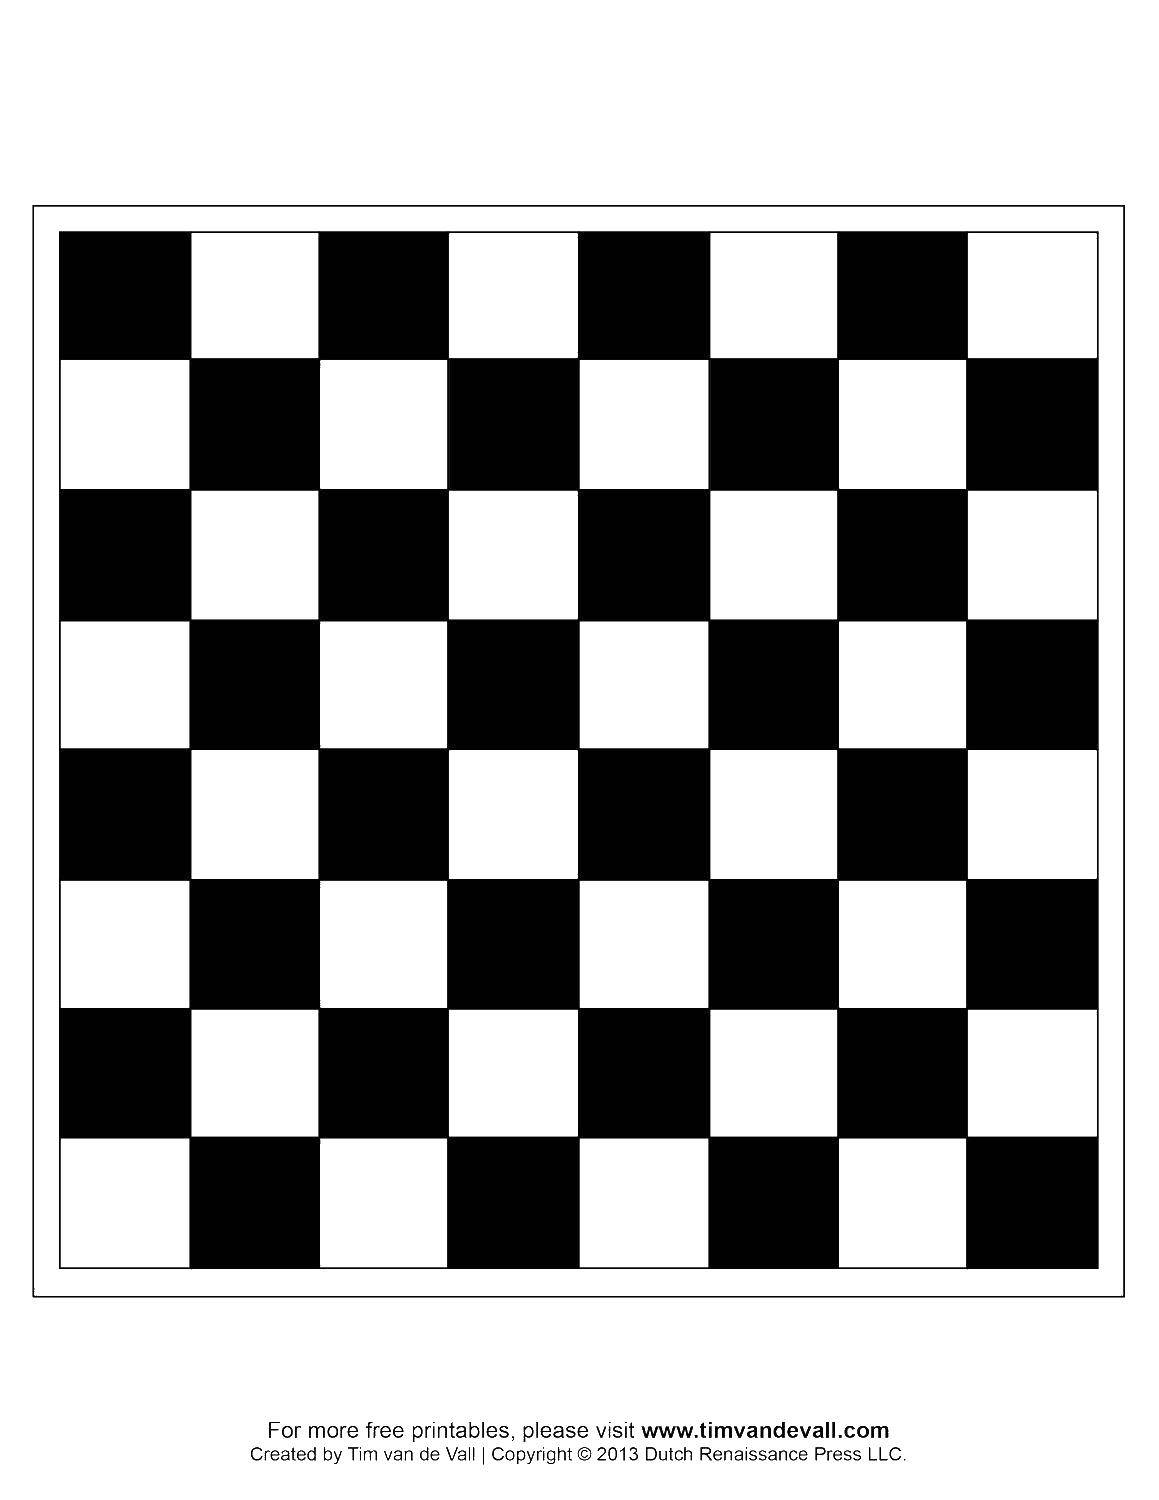 taimyr-expo.ru - Высшая математика - Раскраска шахматной доски